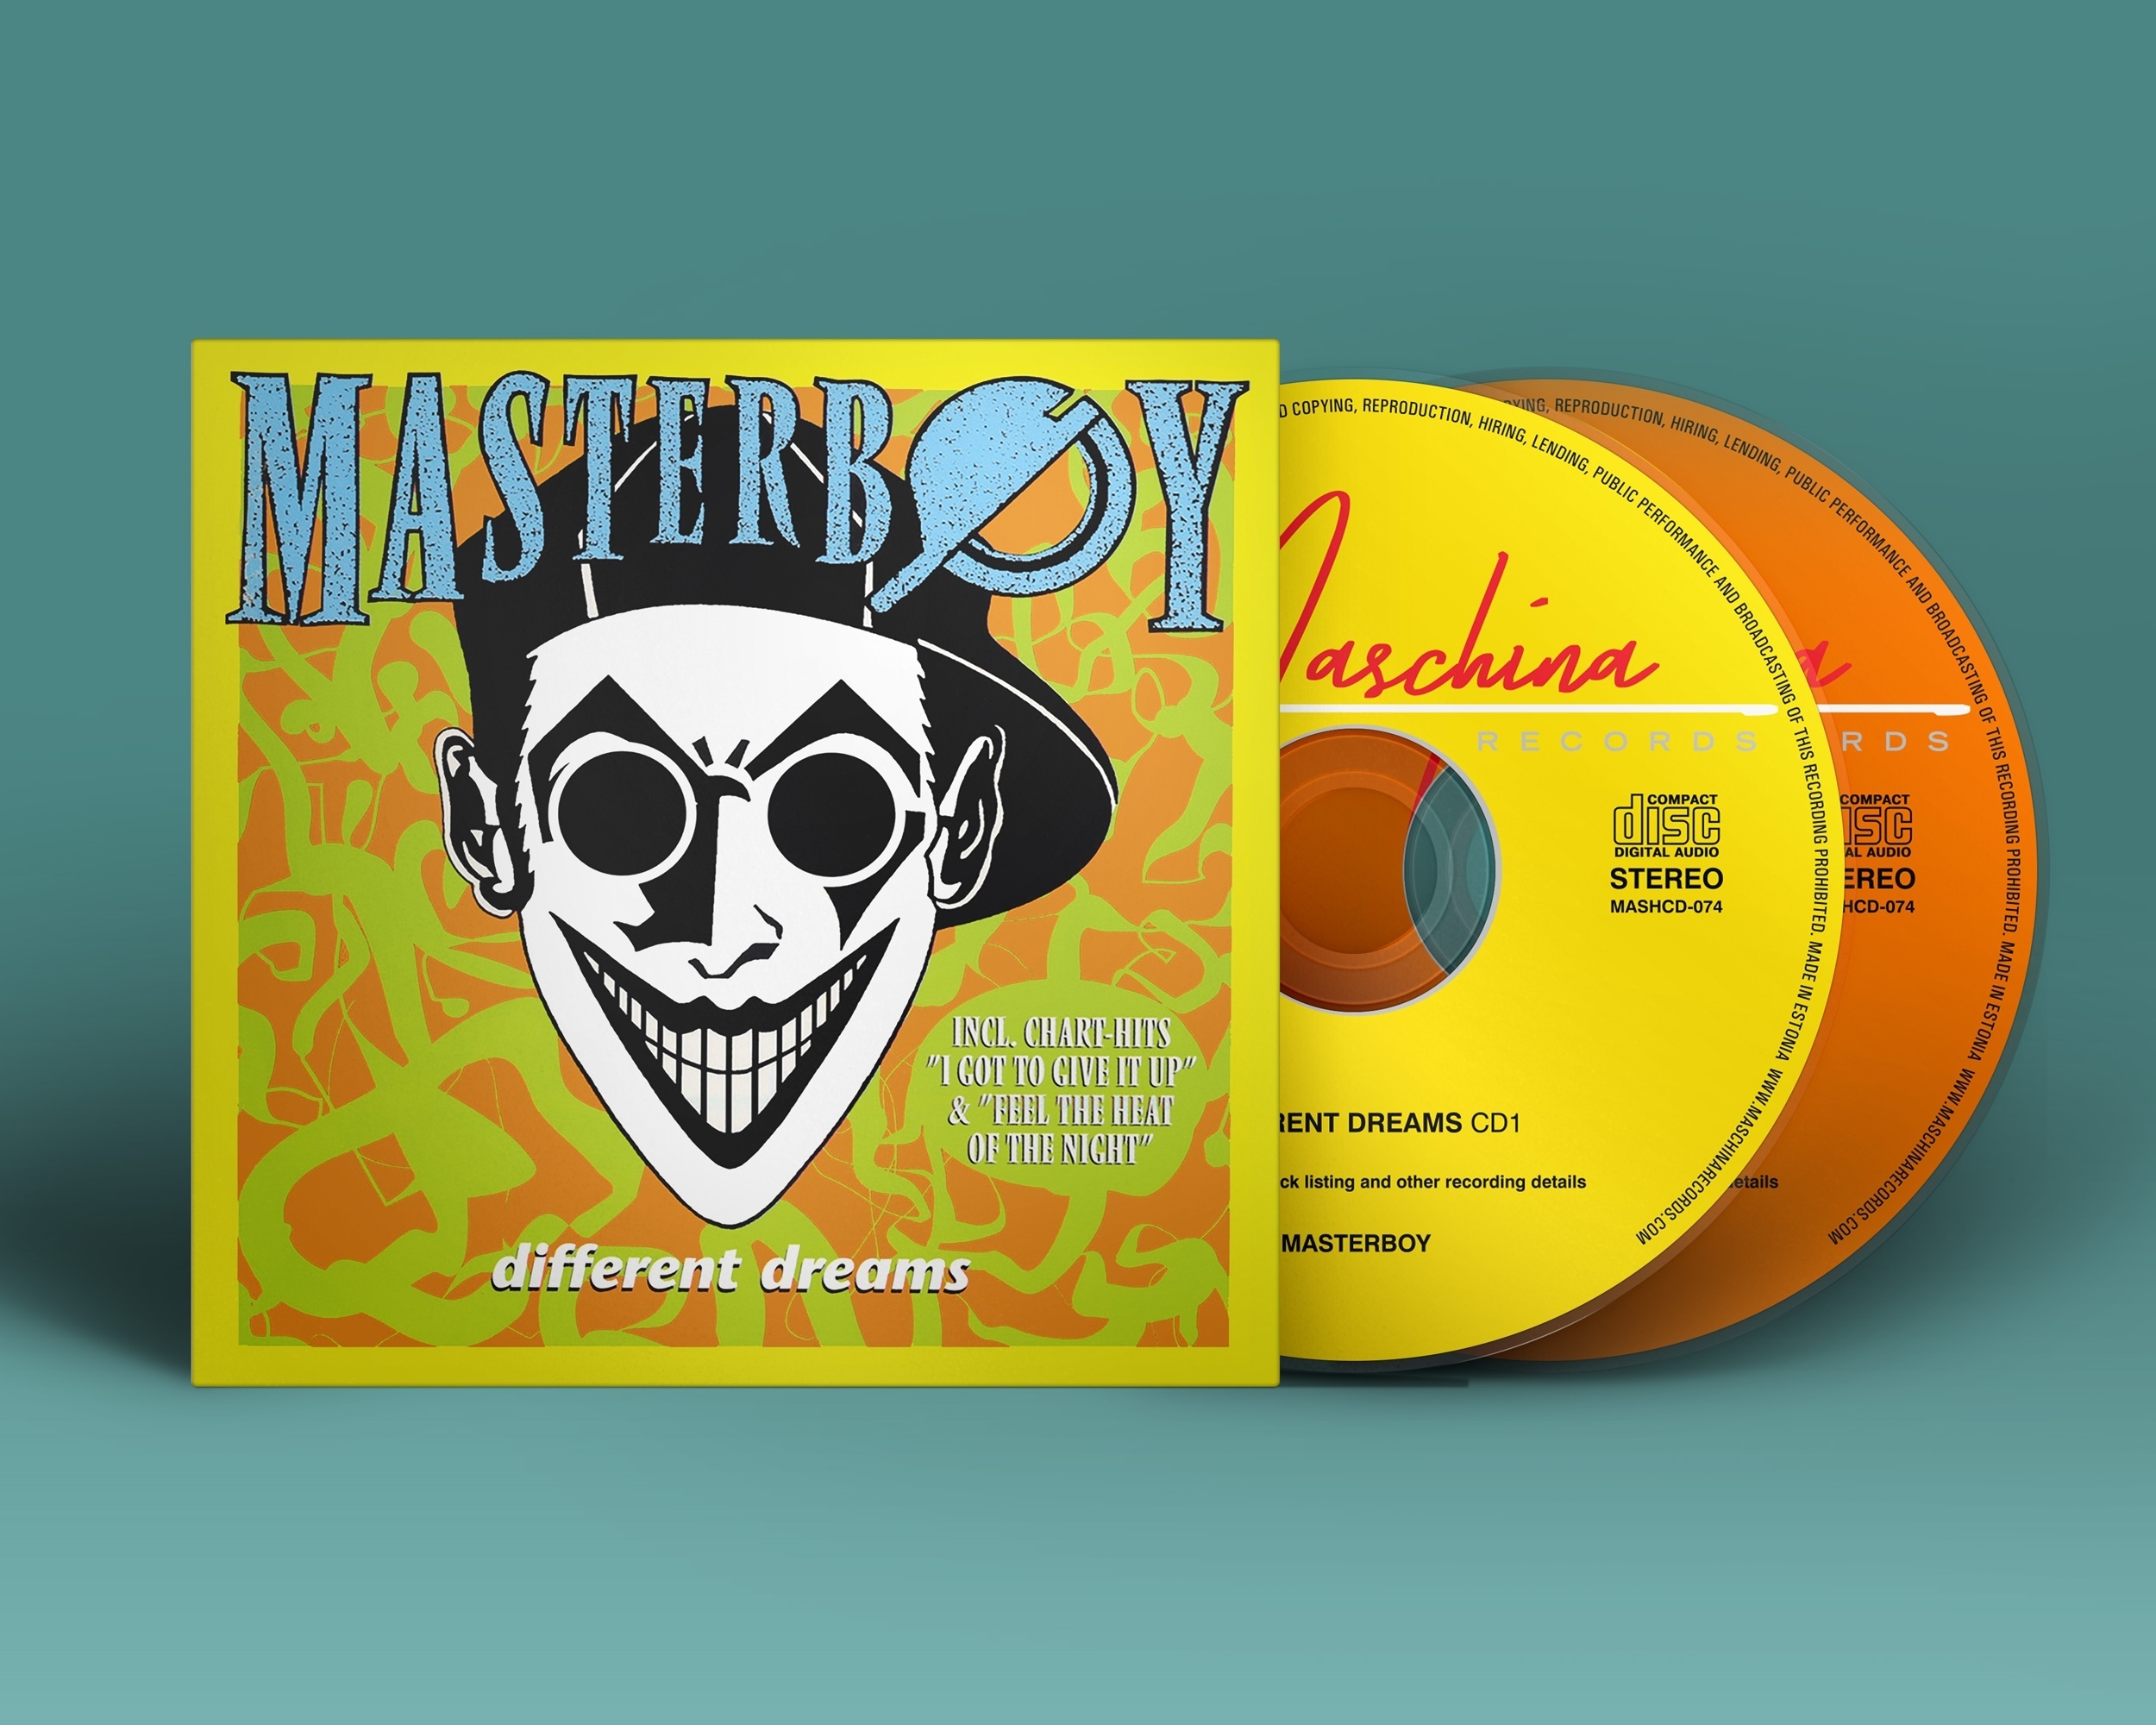 Masterboy the feeling night. Masterboy different Dreams 1994. Masterboy different Dreams 1994 CD. Masterboy different Dreams CD. Masterboy different Dreams LP.